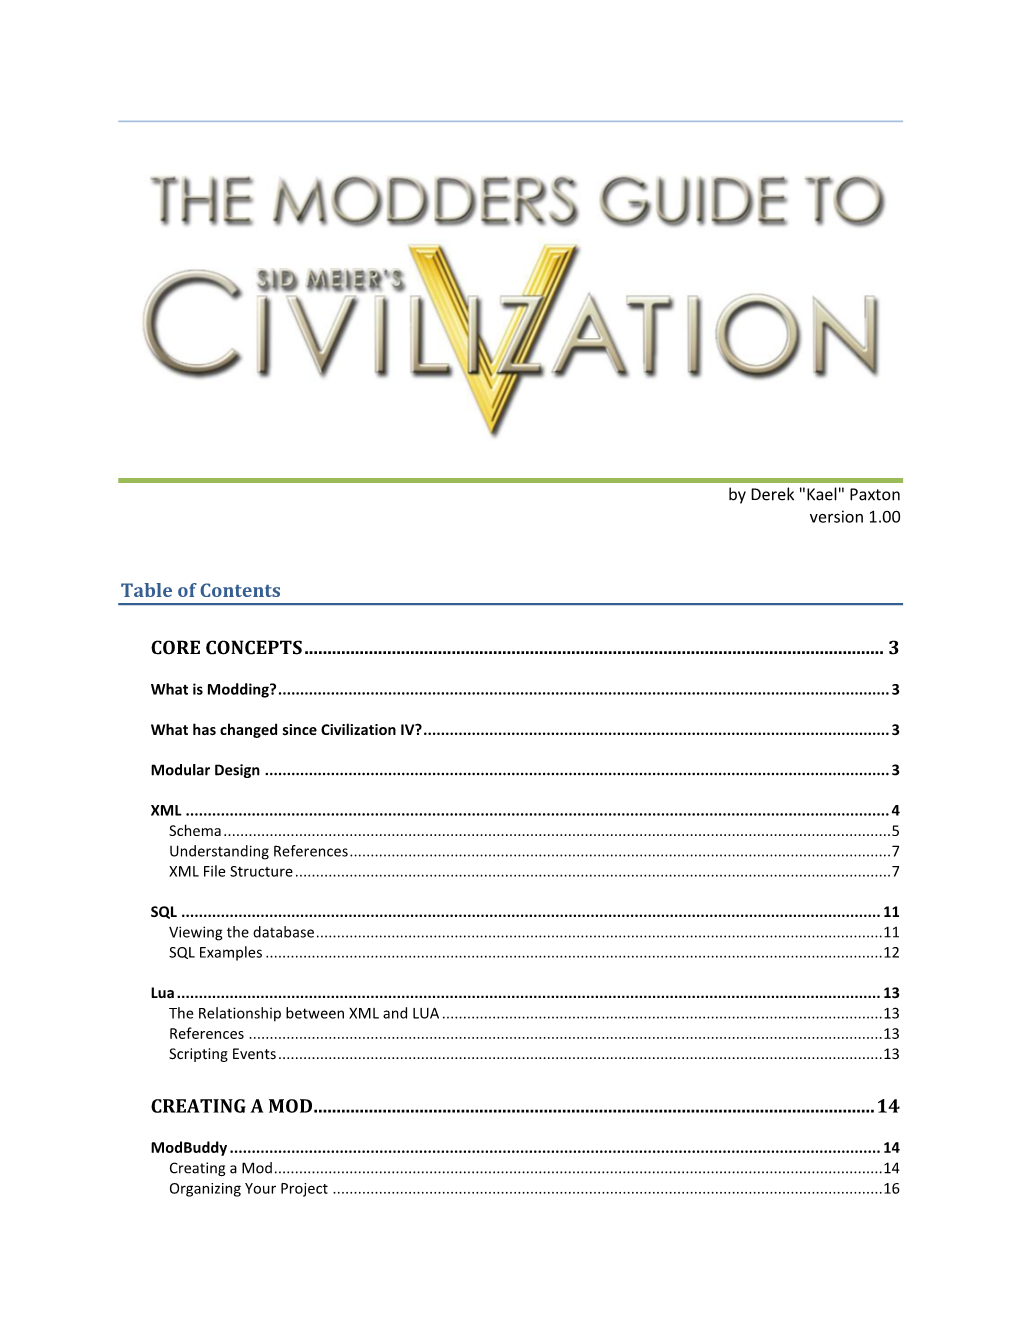 Modders Guide to Civilization V - P a G E | 2